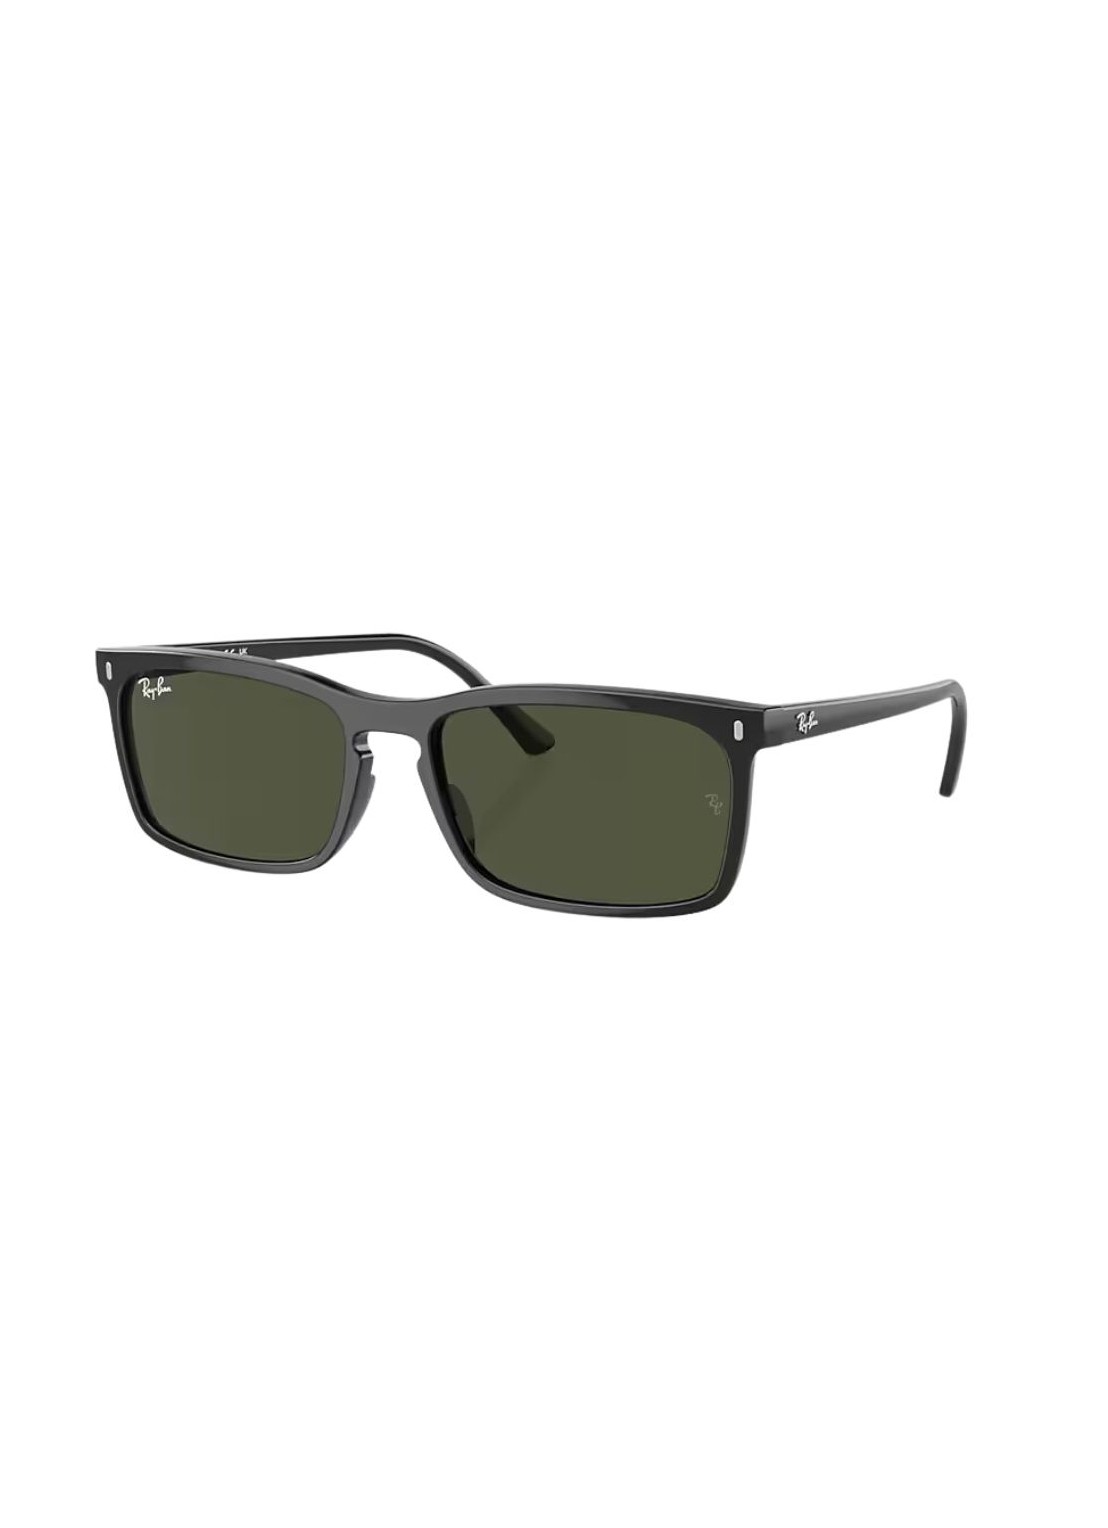 Gafas rayban sunglasses unisex0rb4435 - 0rb4435 901/58 talla transparente
 